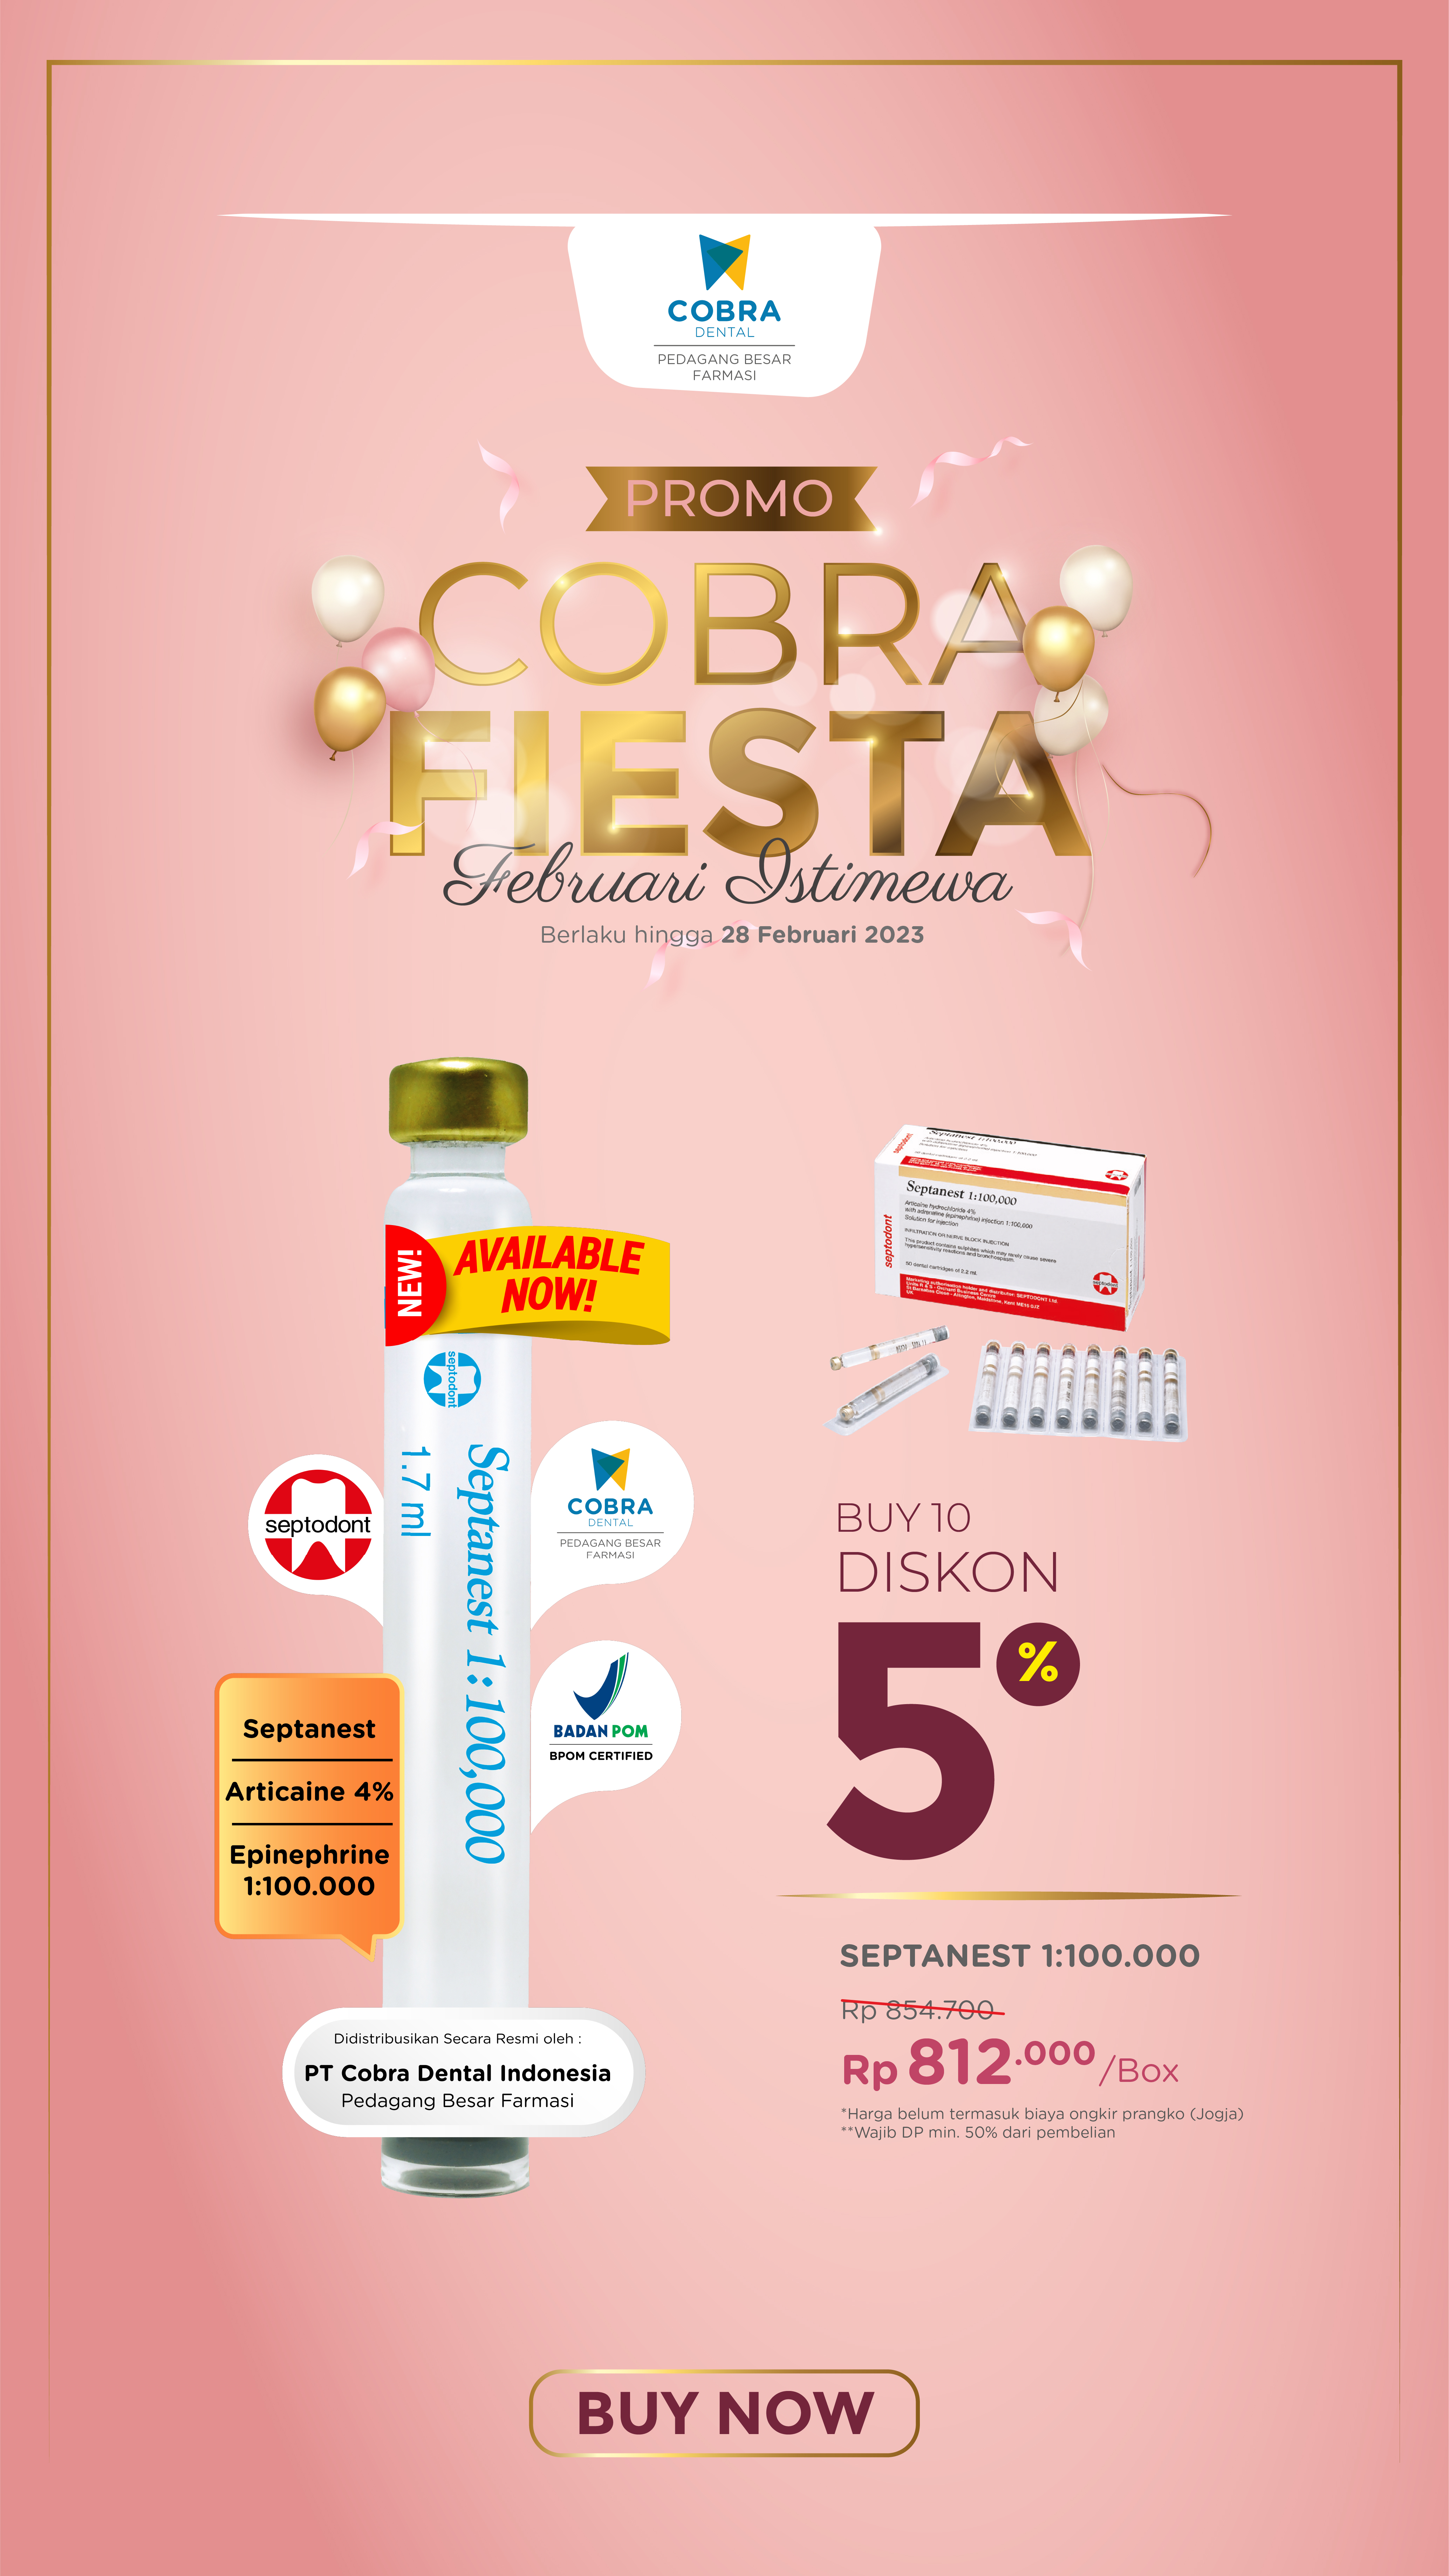 PROMO ALAT DENTAL FEBRUARI 2023! Cobra Fiesta, Februari Istimewa.